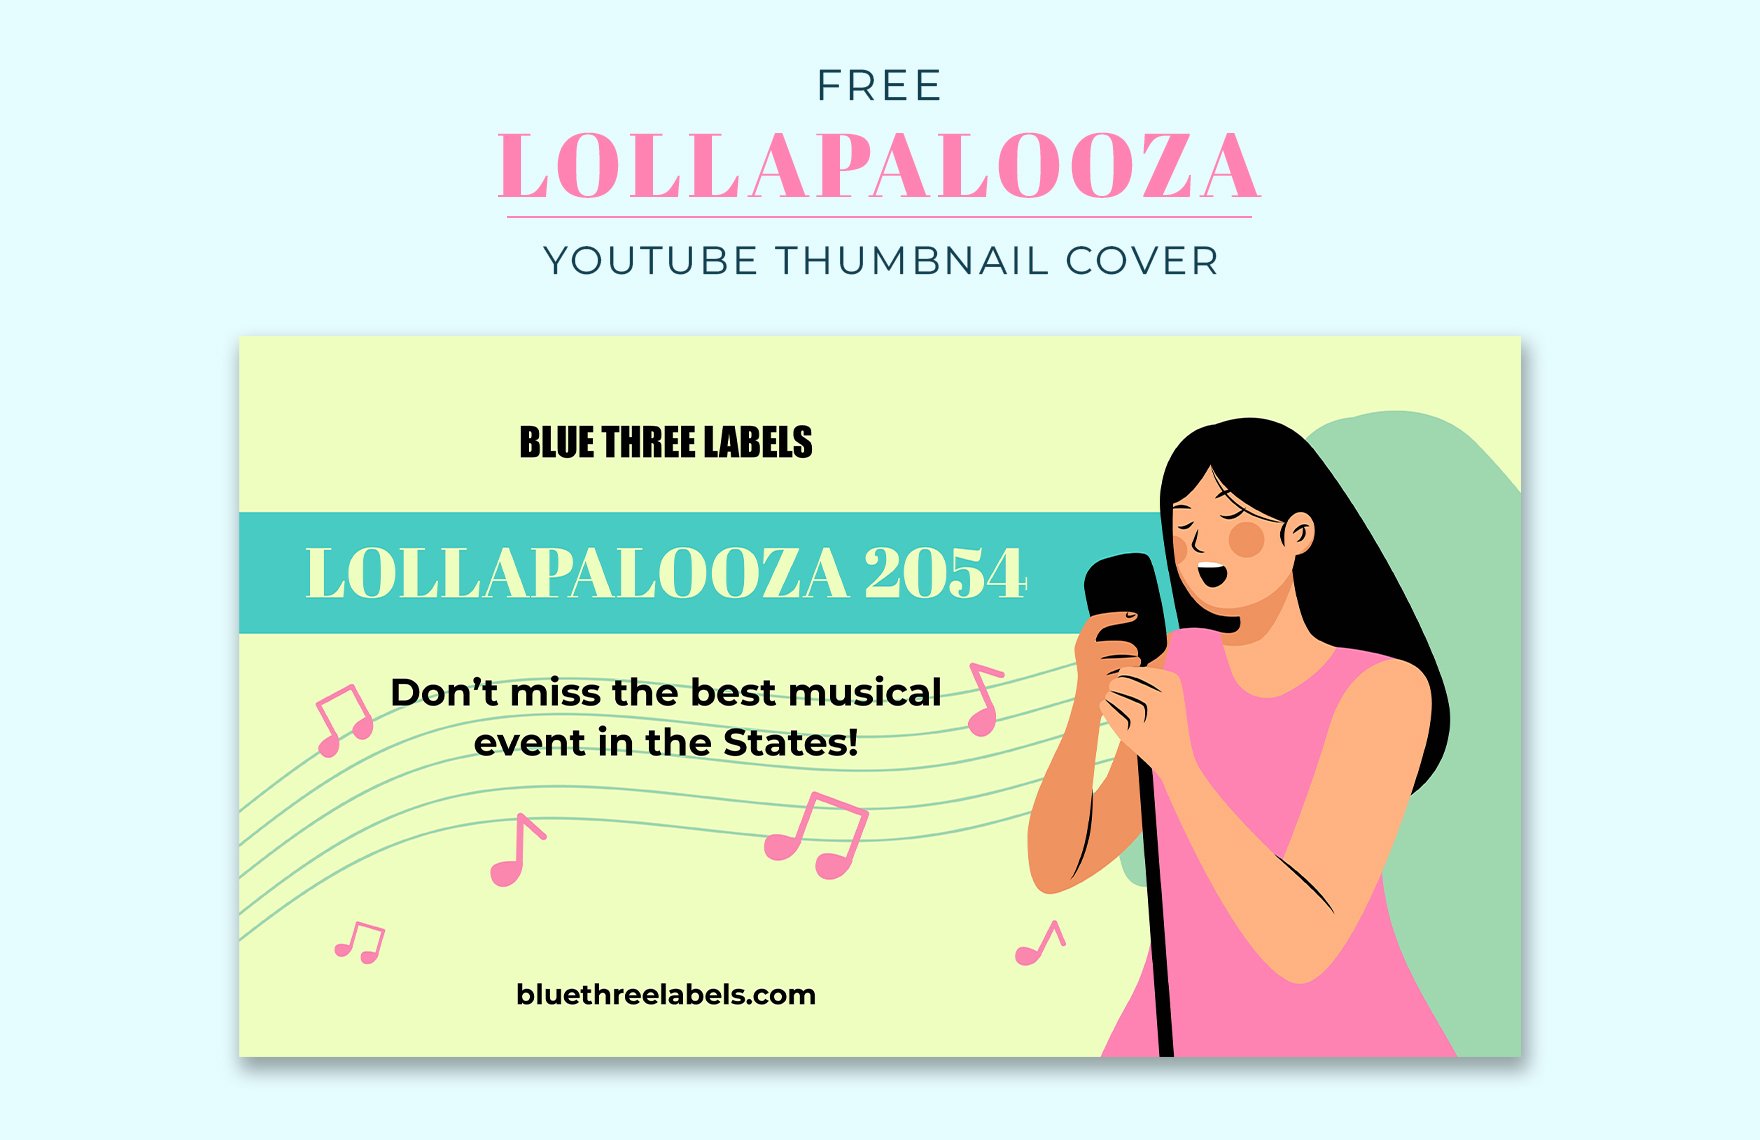 Lollapalooza Youtube Thumbnail Cover